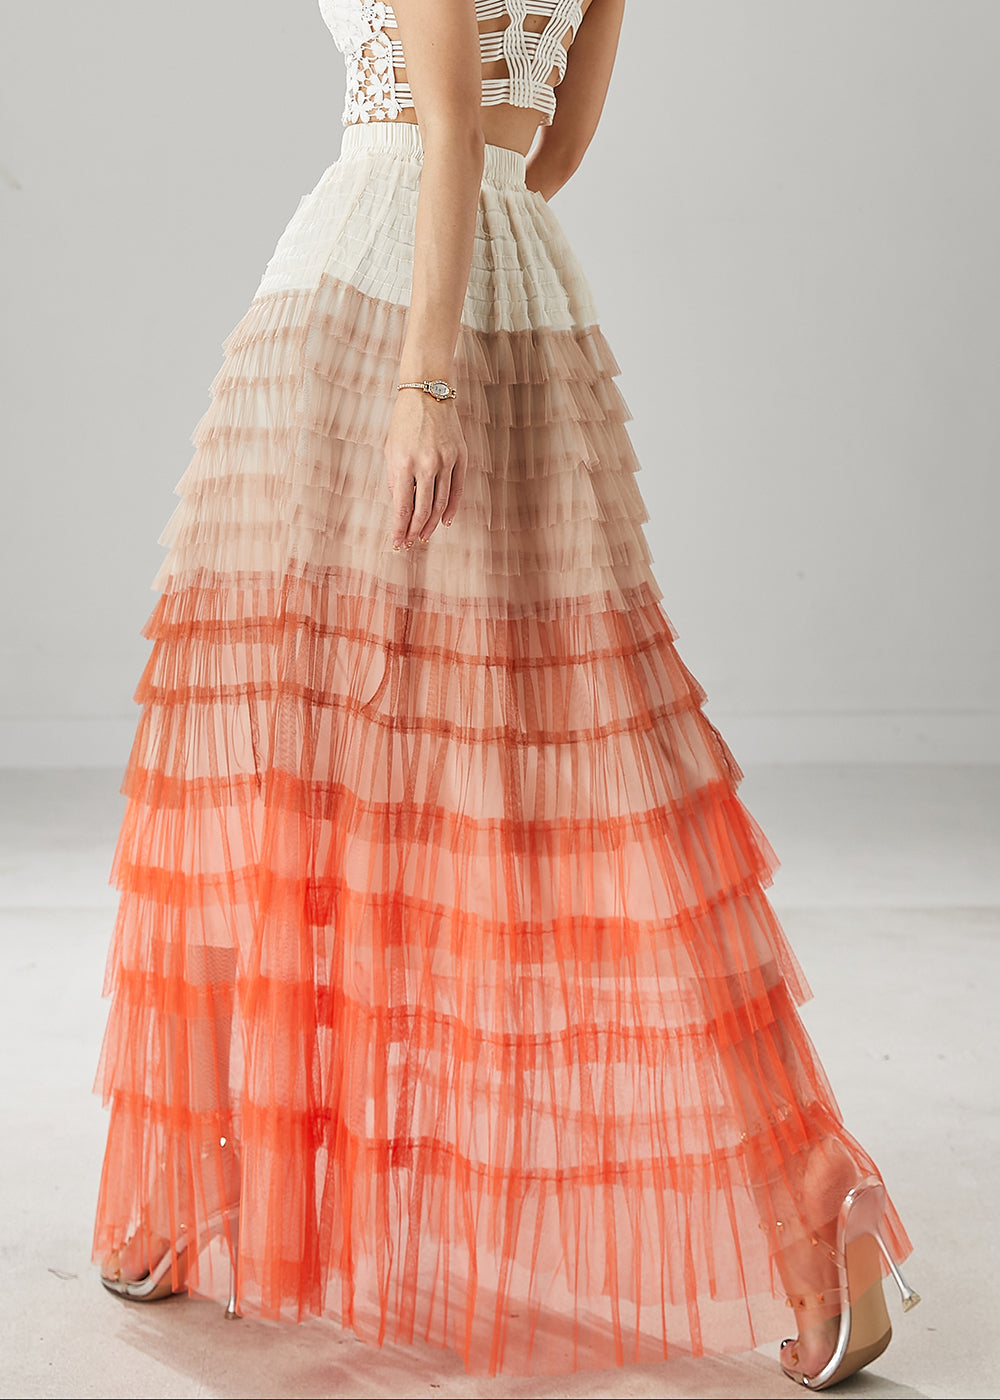 Organic Orange Ruffled Patchwork Tulle Skirts Summer YU1027